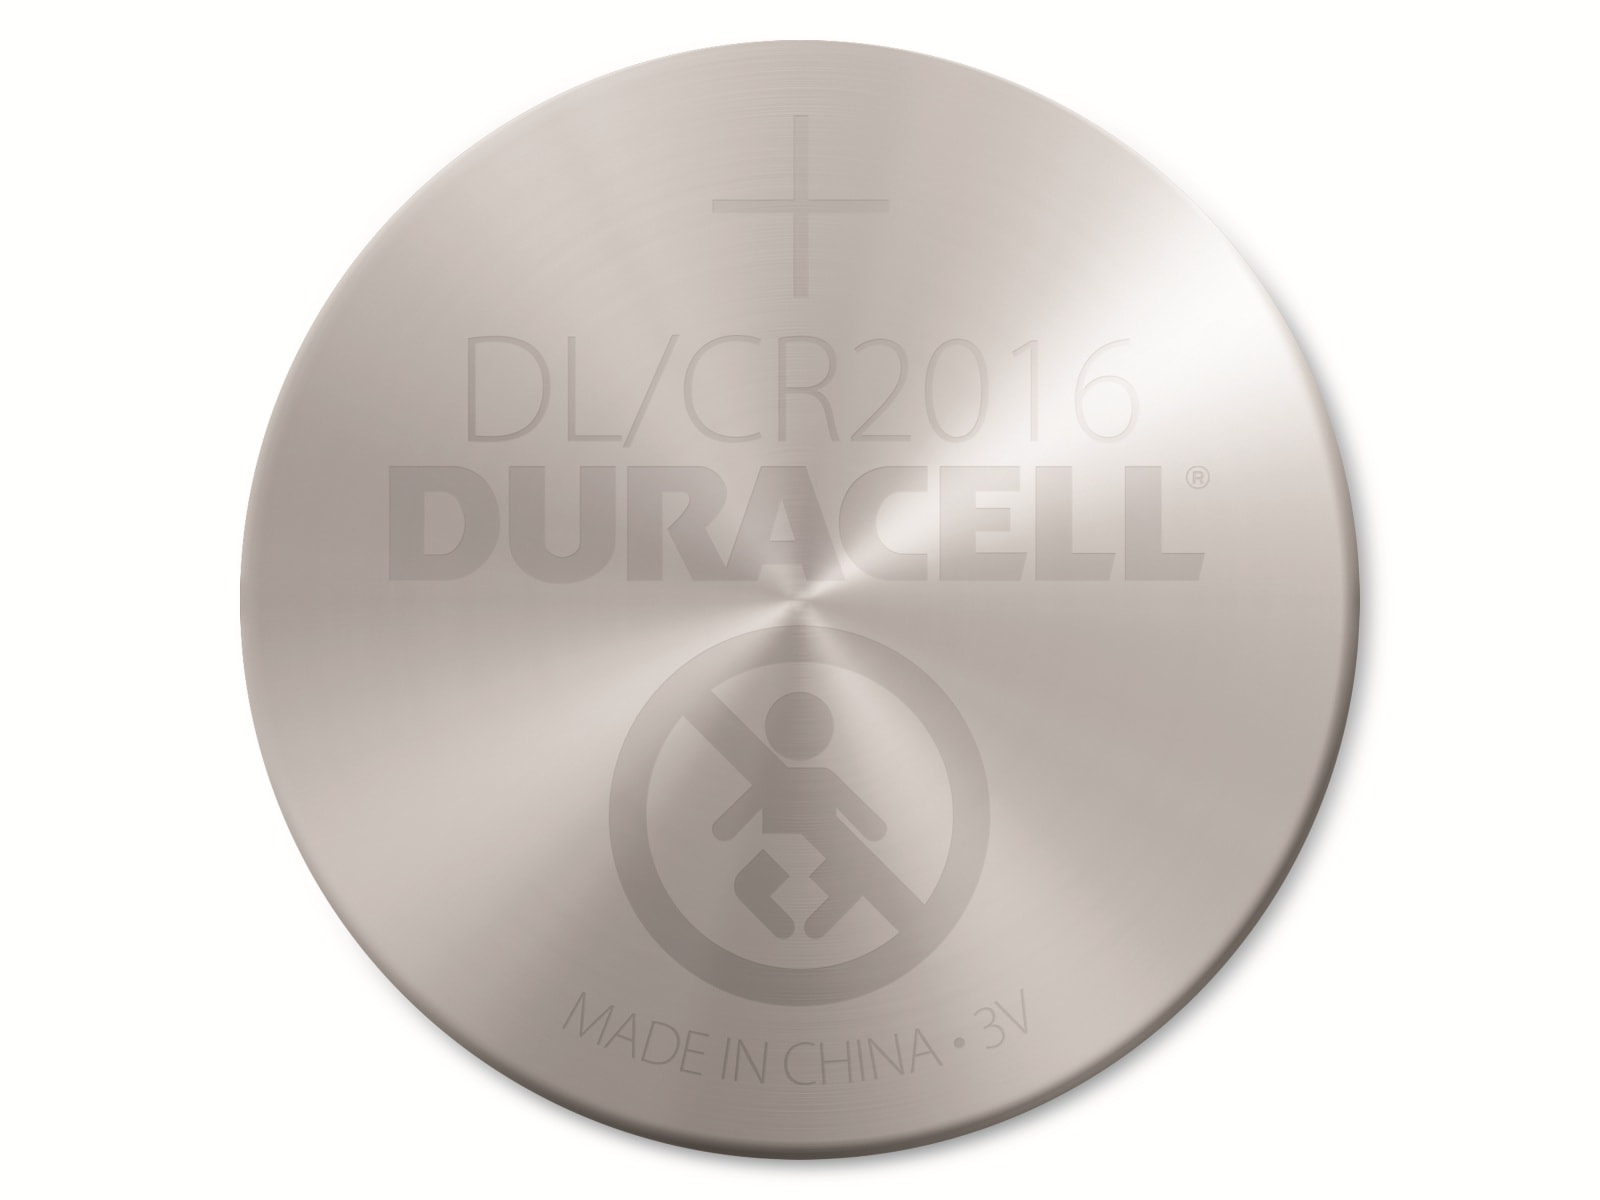 DURACELL Lithium-Knopfzelle CR2016, 3V, 5 Stück